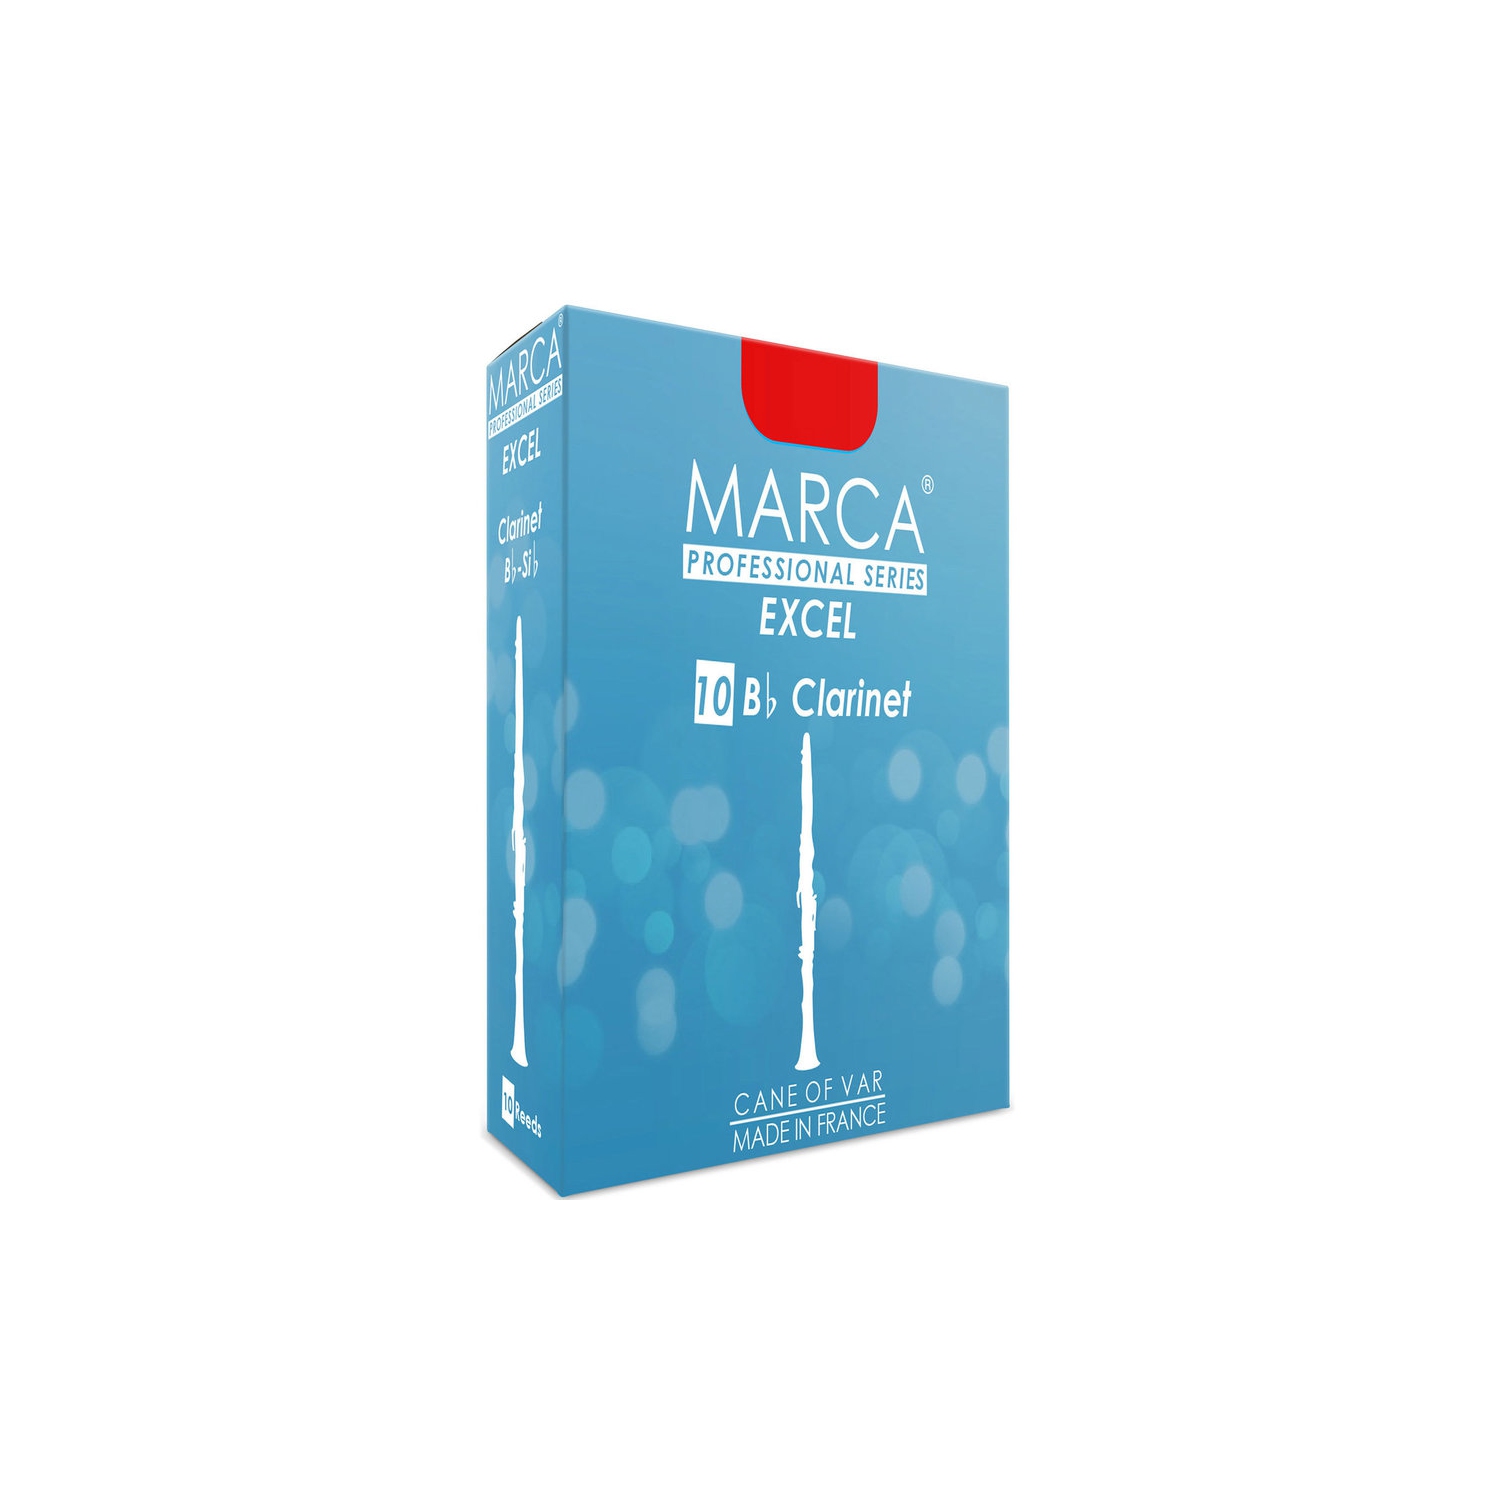 Marca Excel Bb Clarinet Reeds - #3, 10 Box